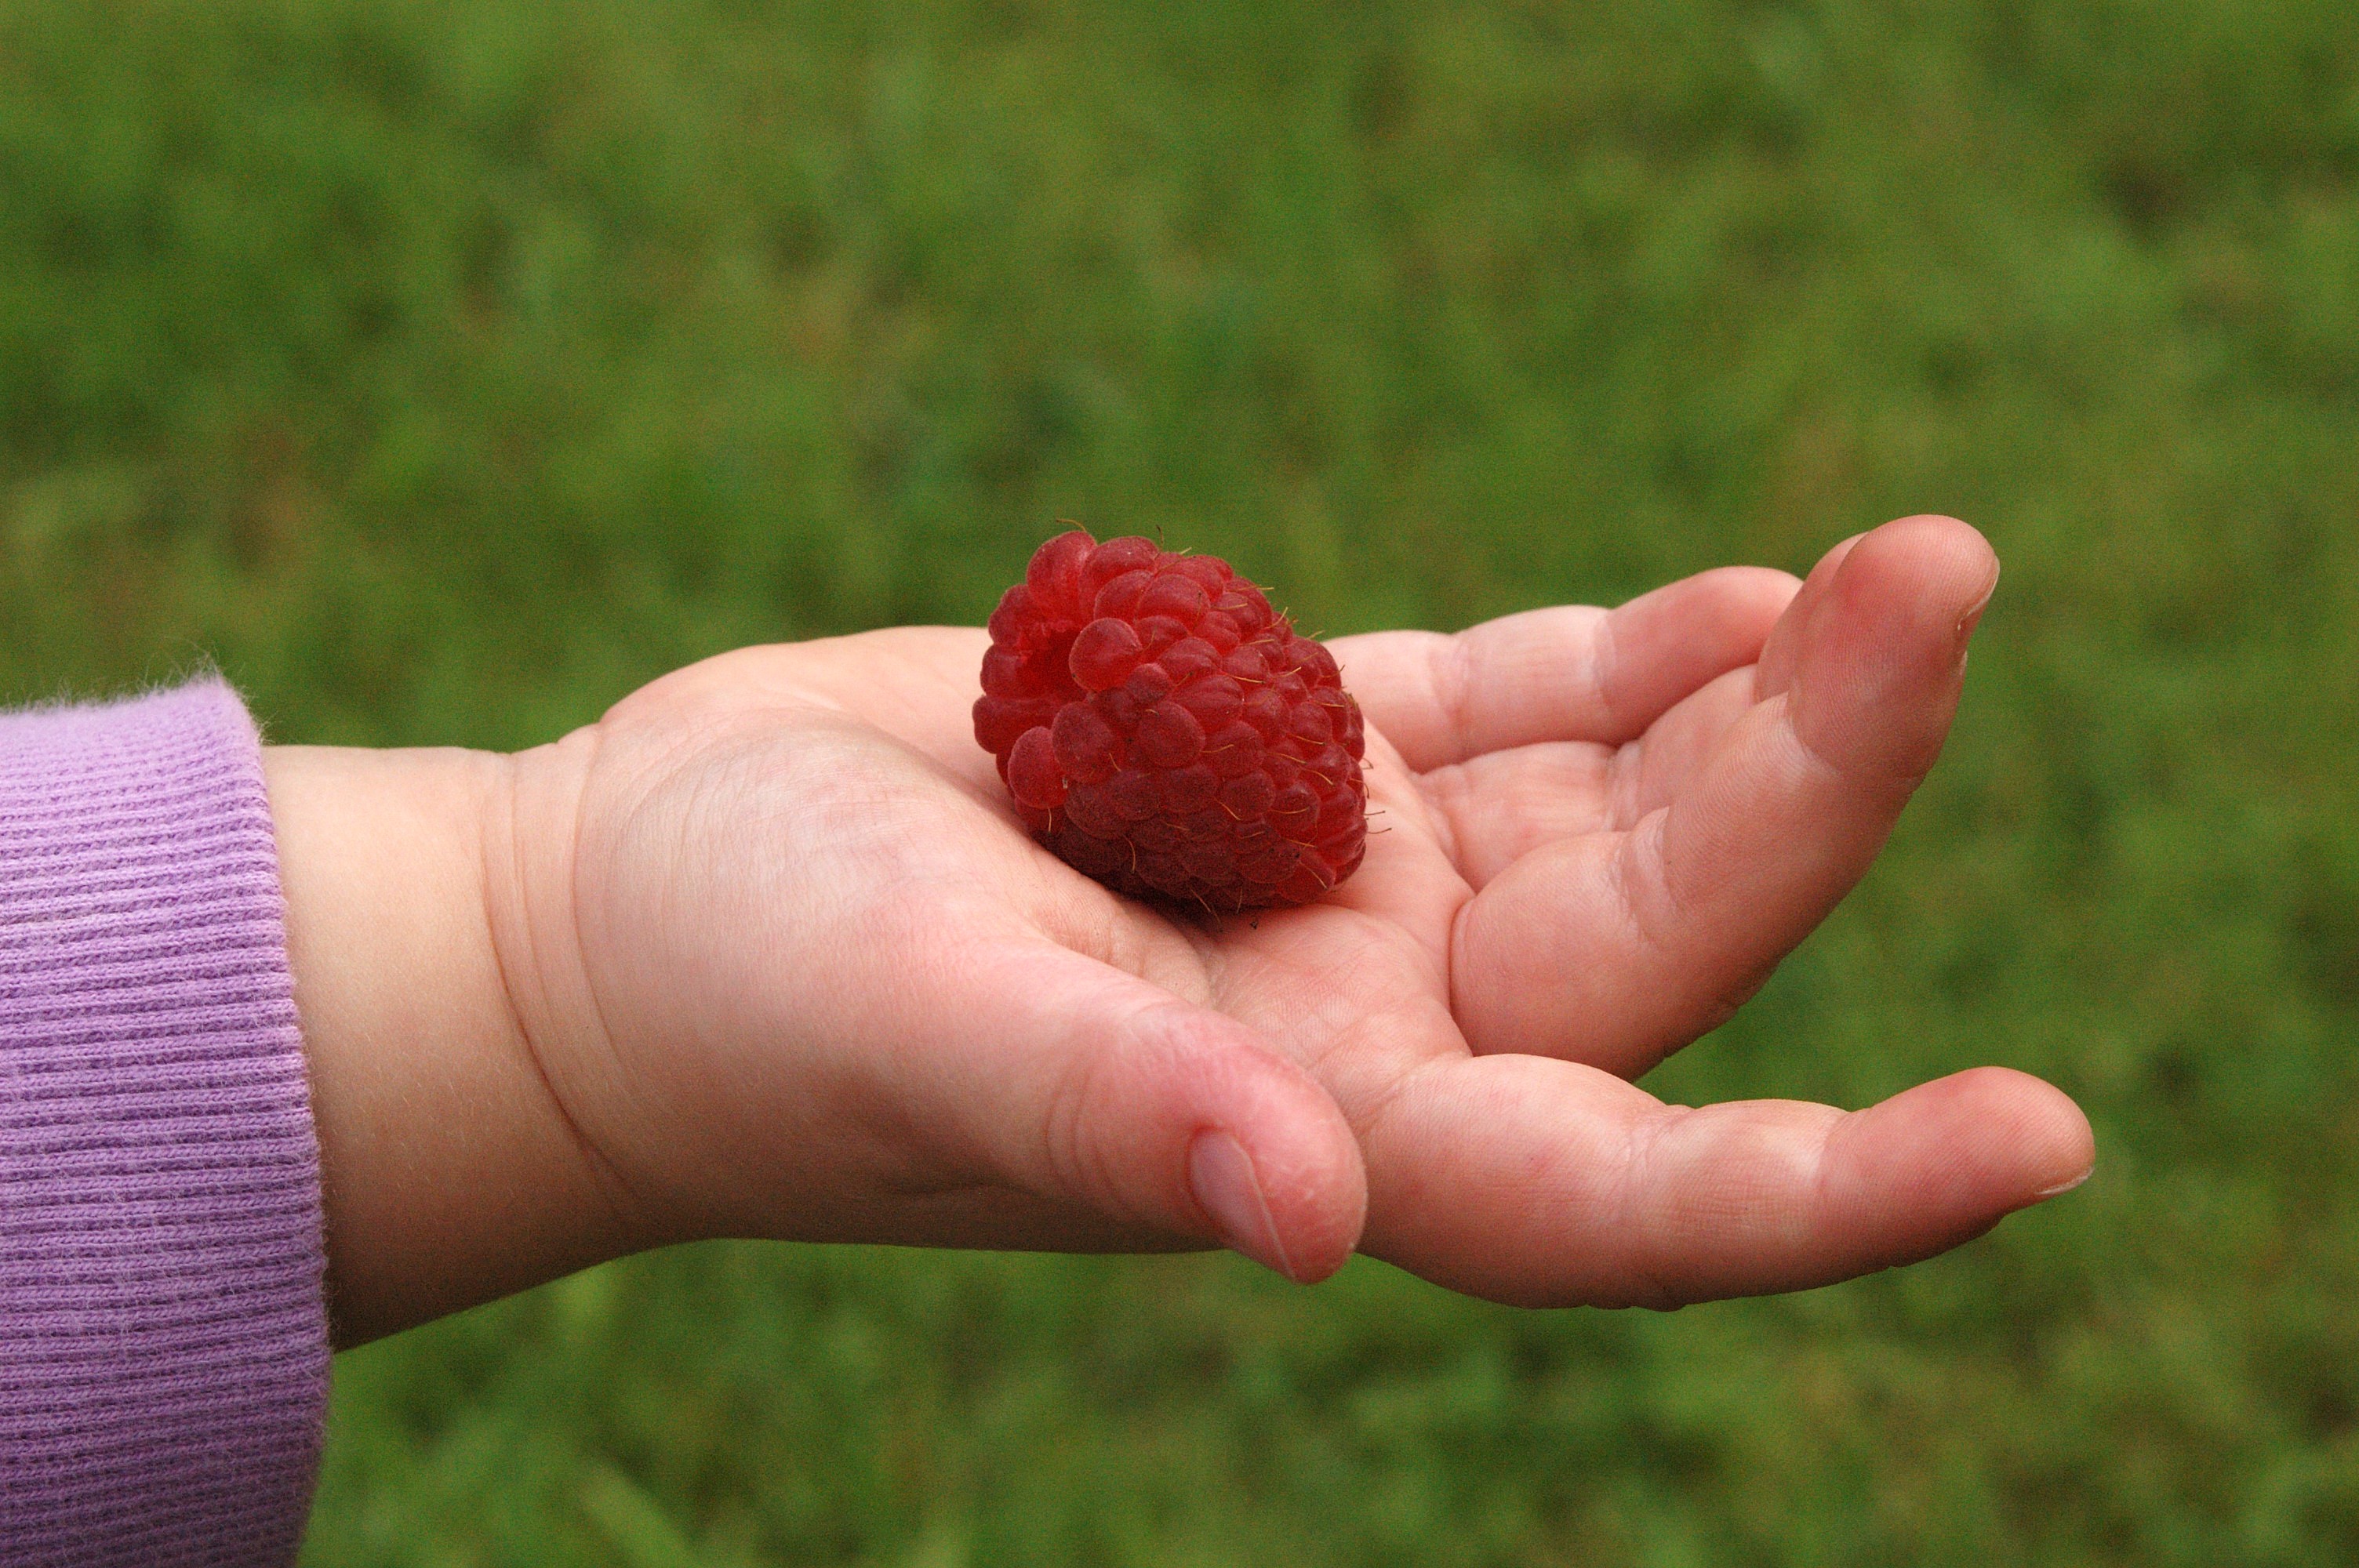 Raspberry on child's hand.